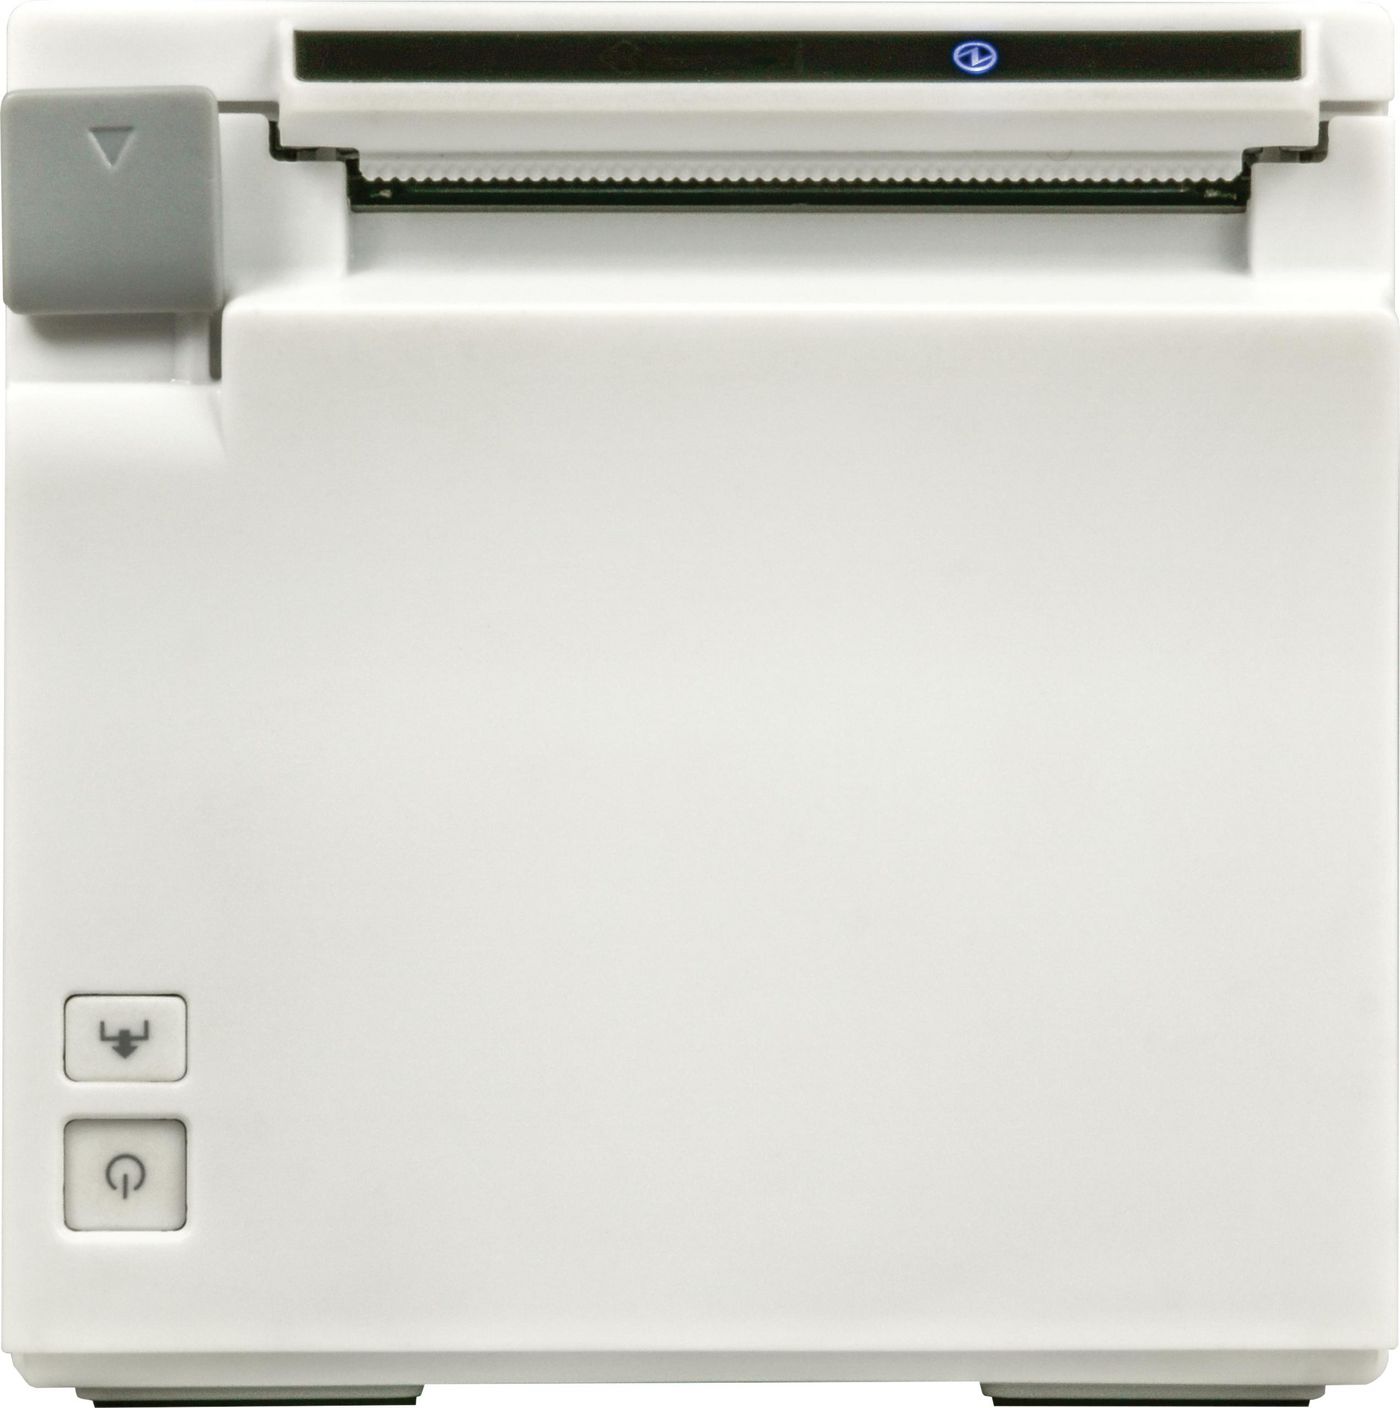 Tm-m30ii-h (141) - Pos Printer - Thermal - 80mm - USB Ethernet Bt Lightng Sd